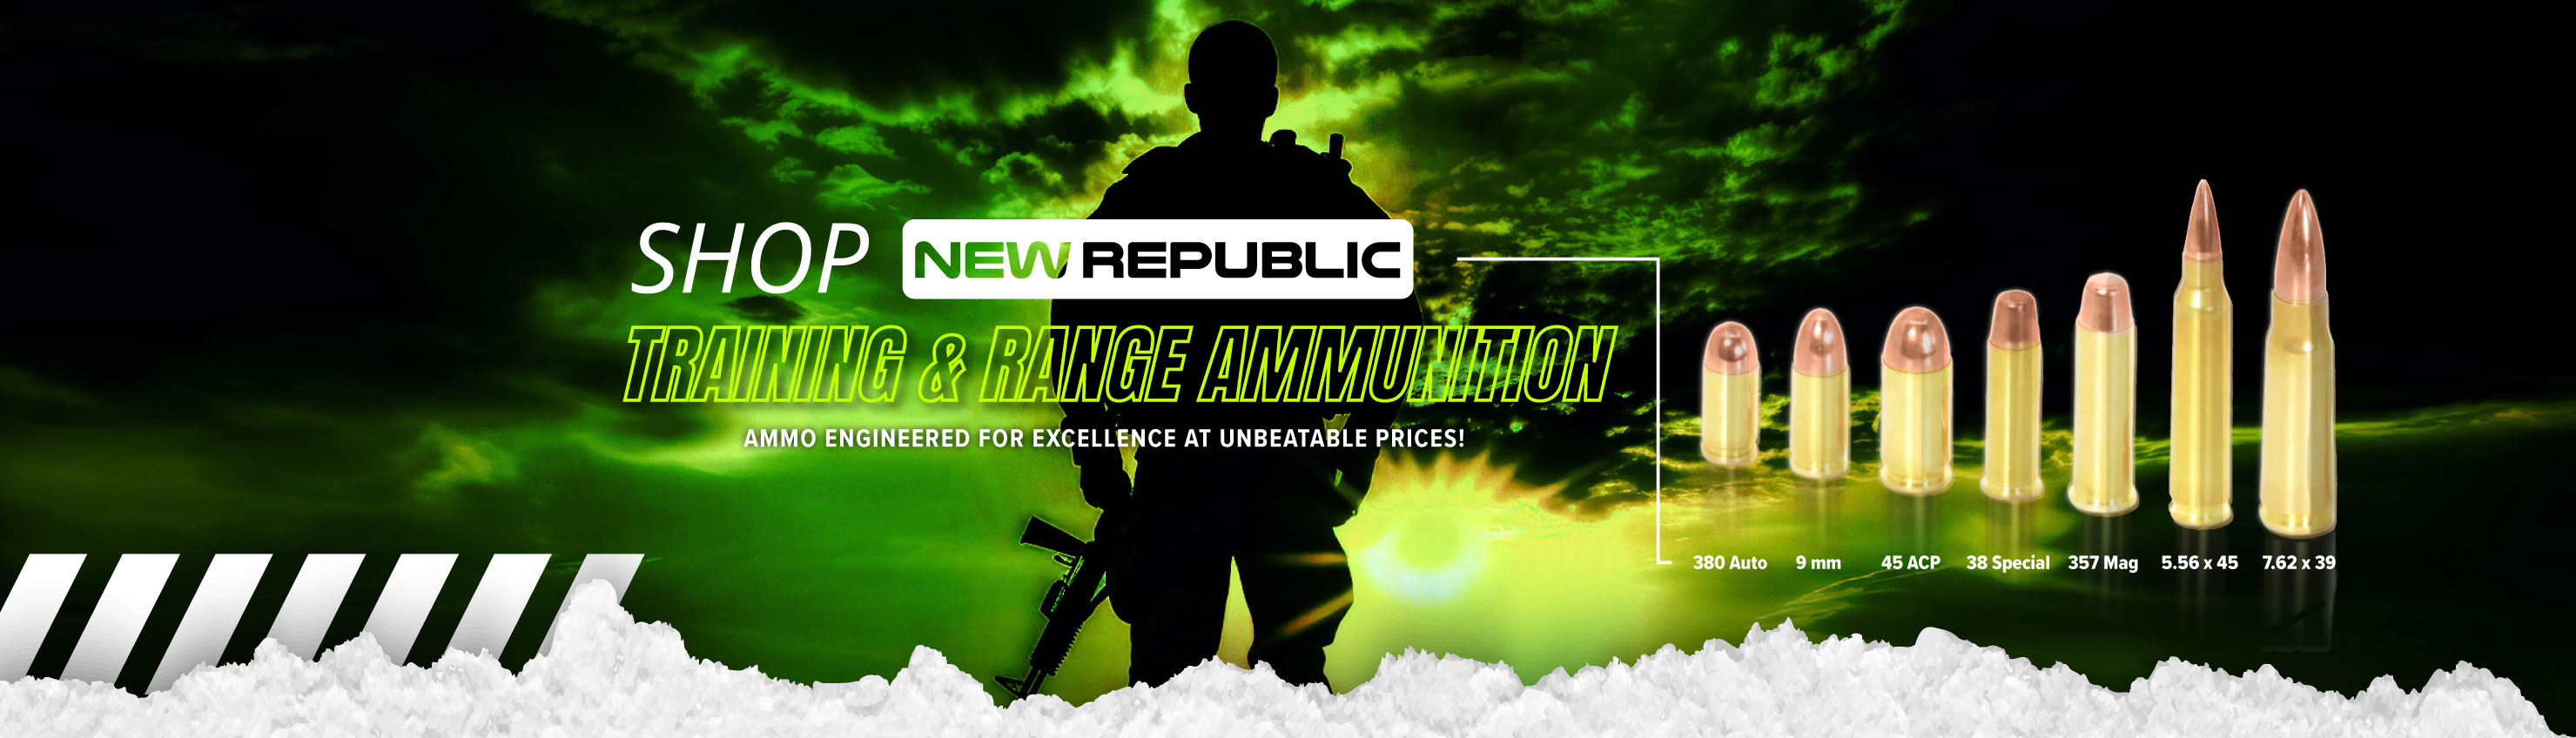 New Republic Ammunition